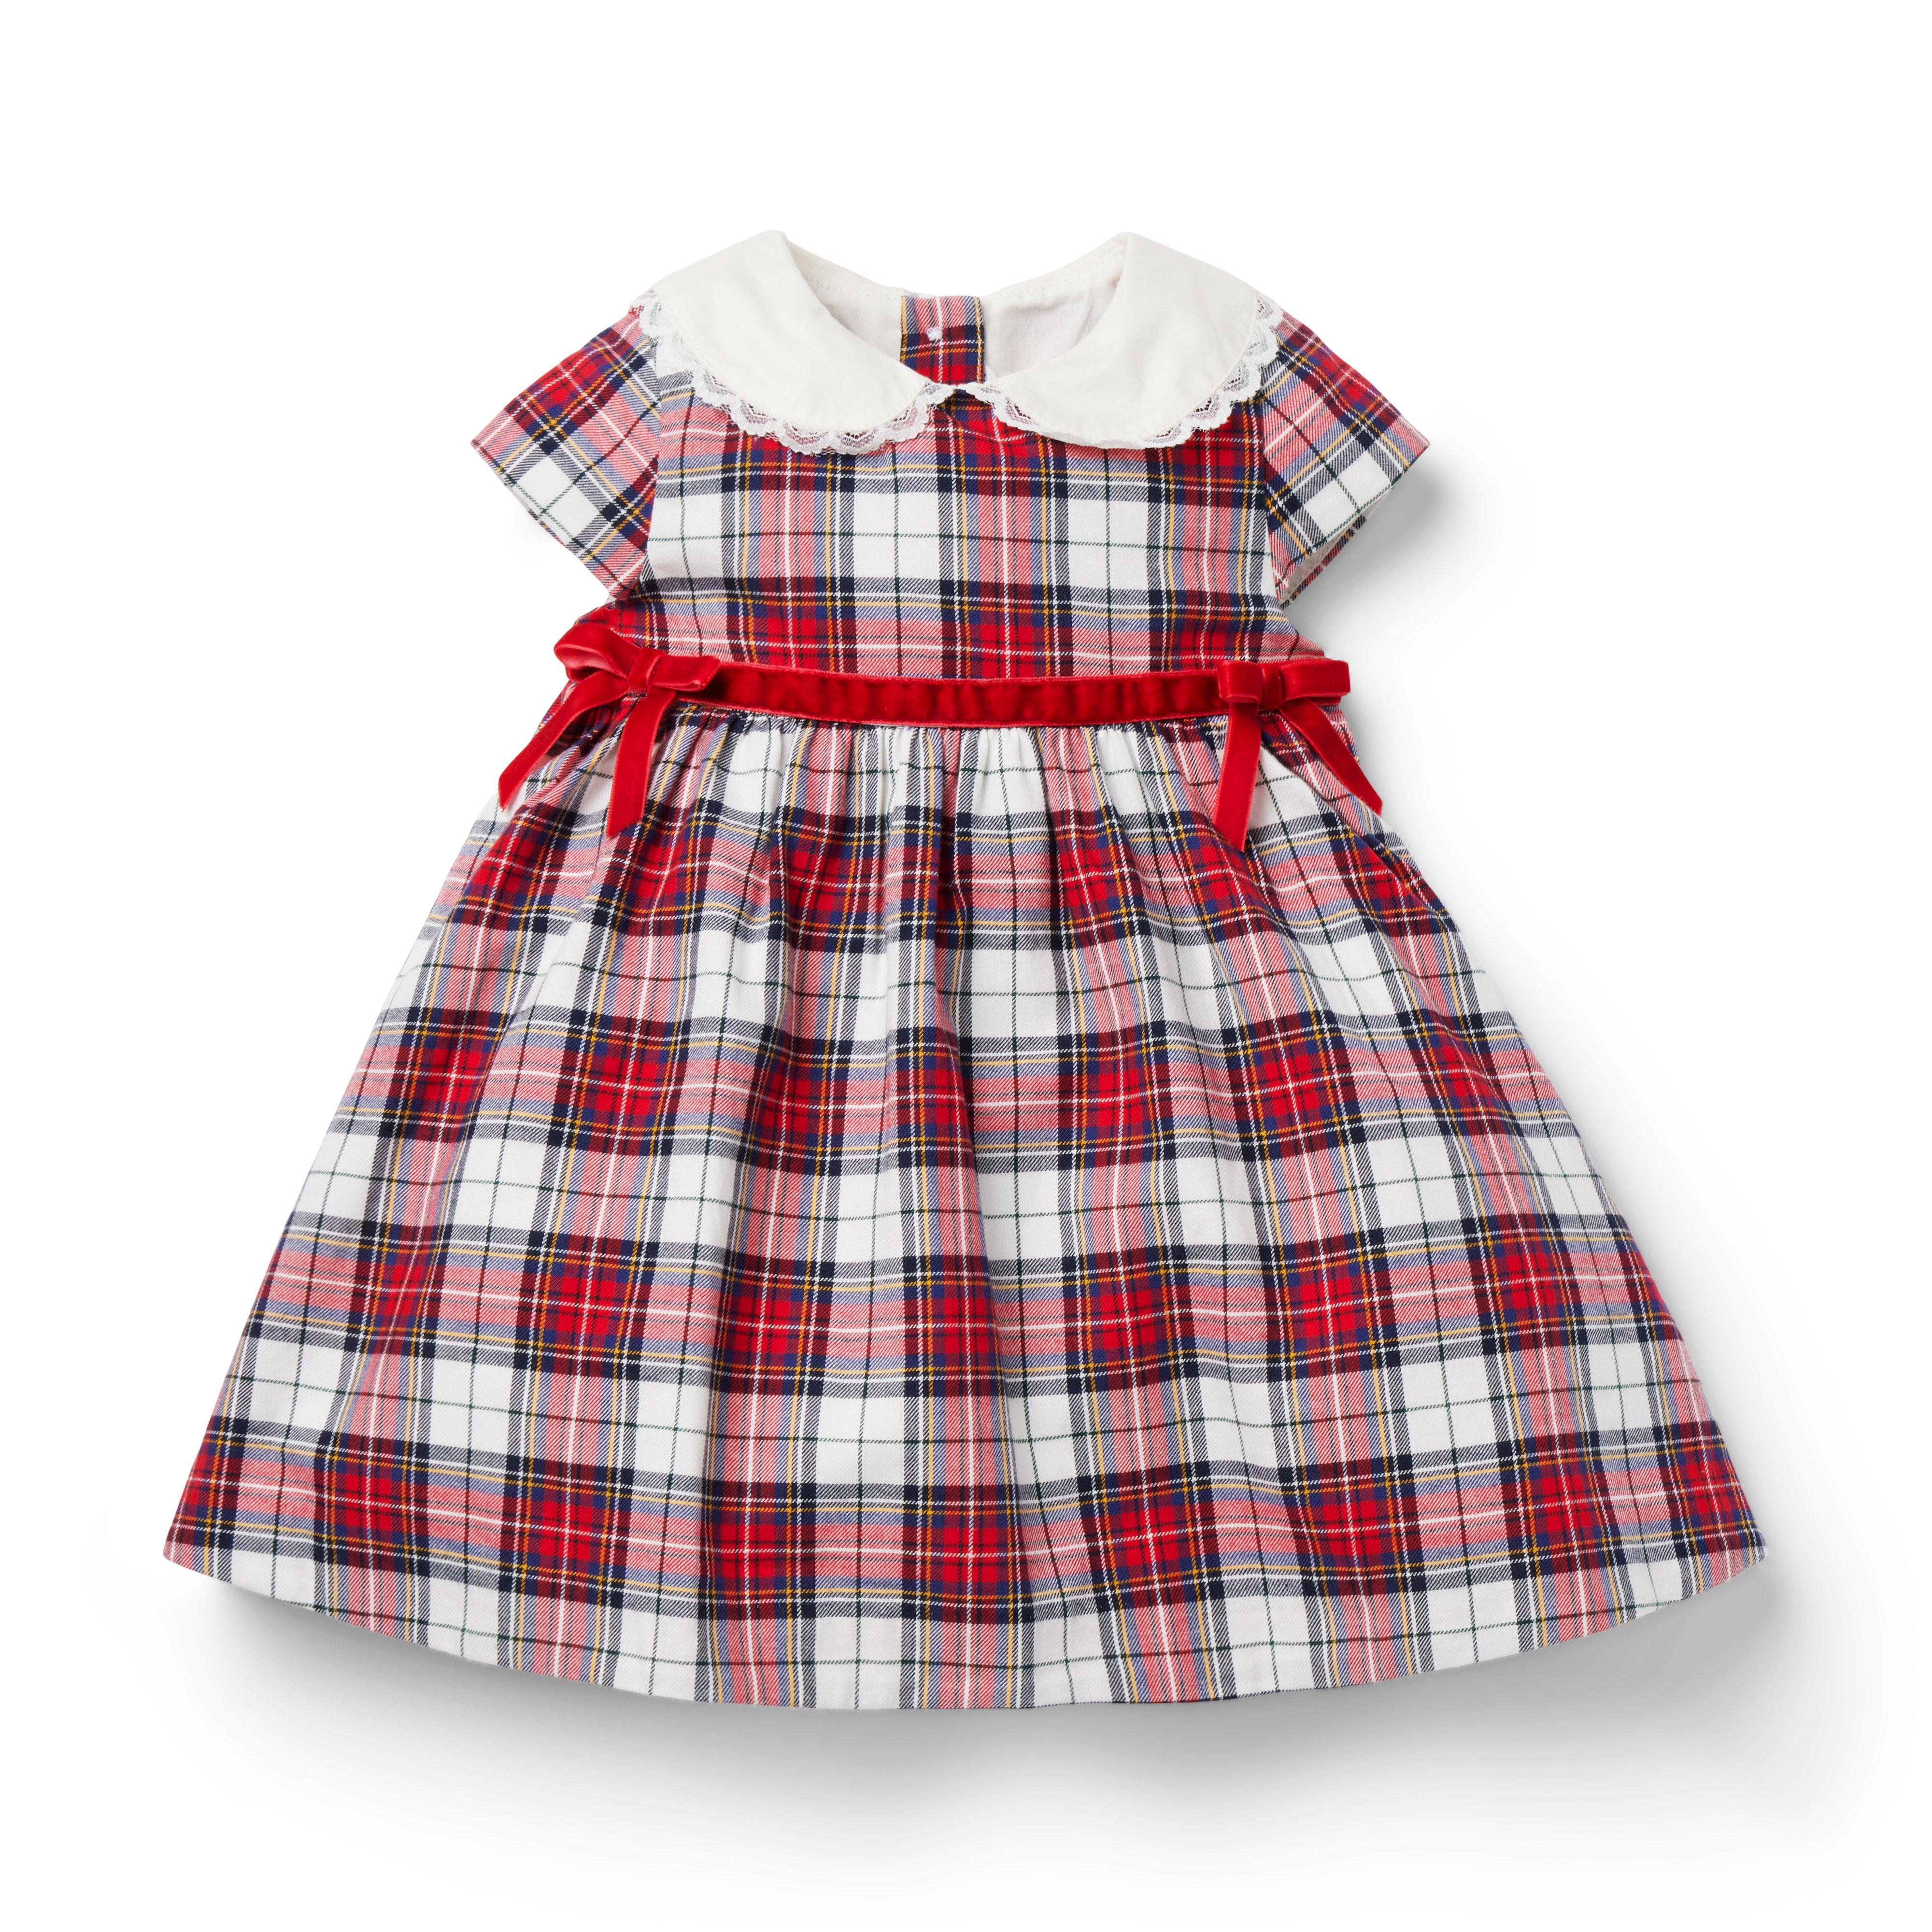 The Holiday Tartan Baby Dress